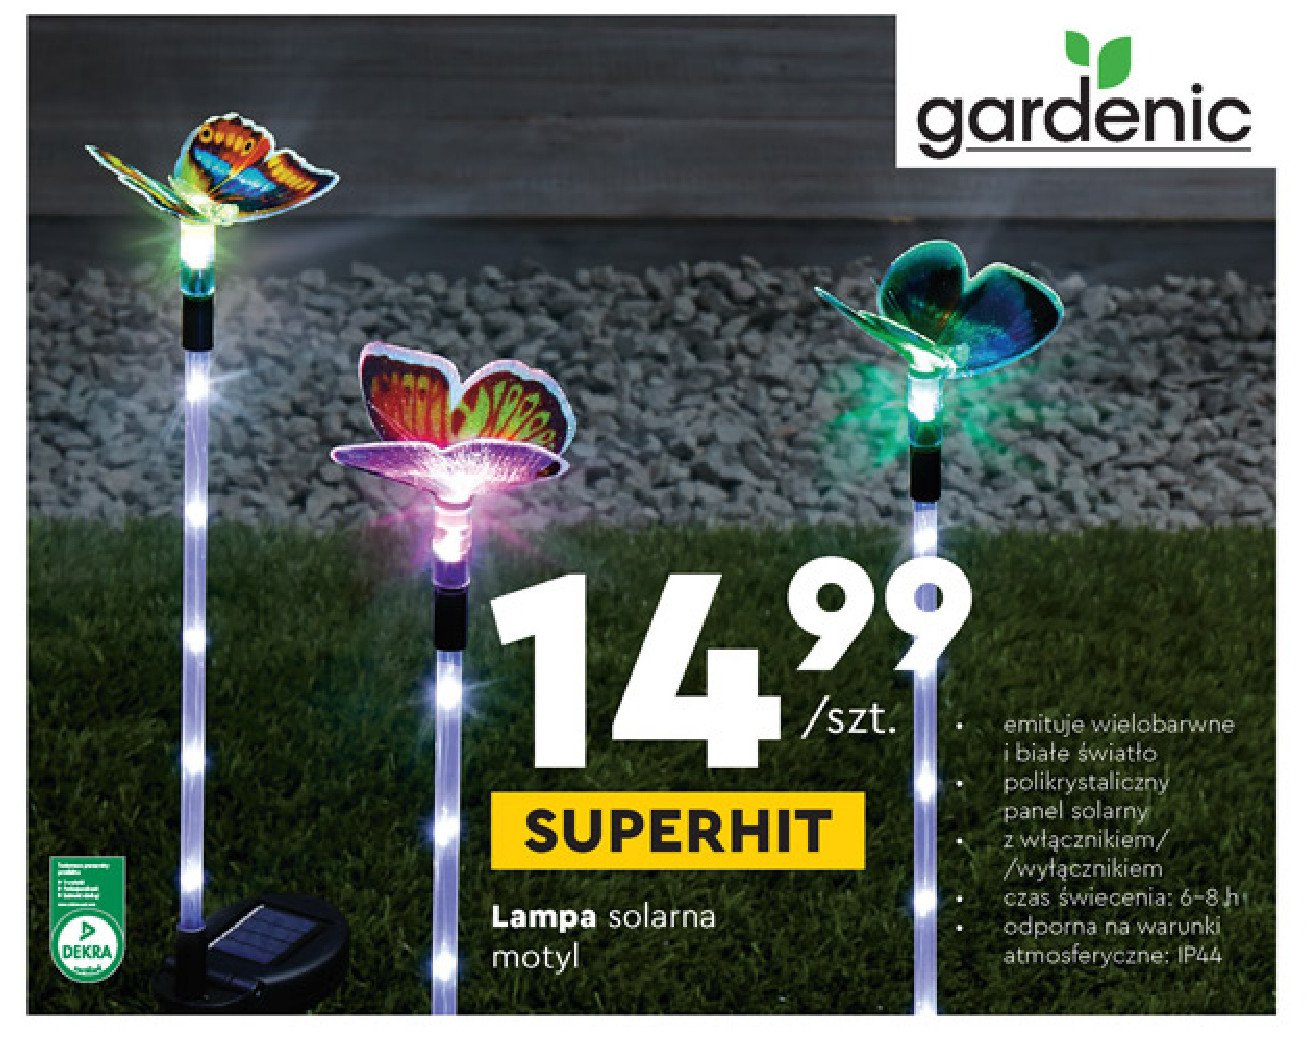 Lampa solarna motyl Gardenic promocja